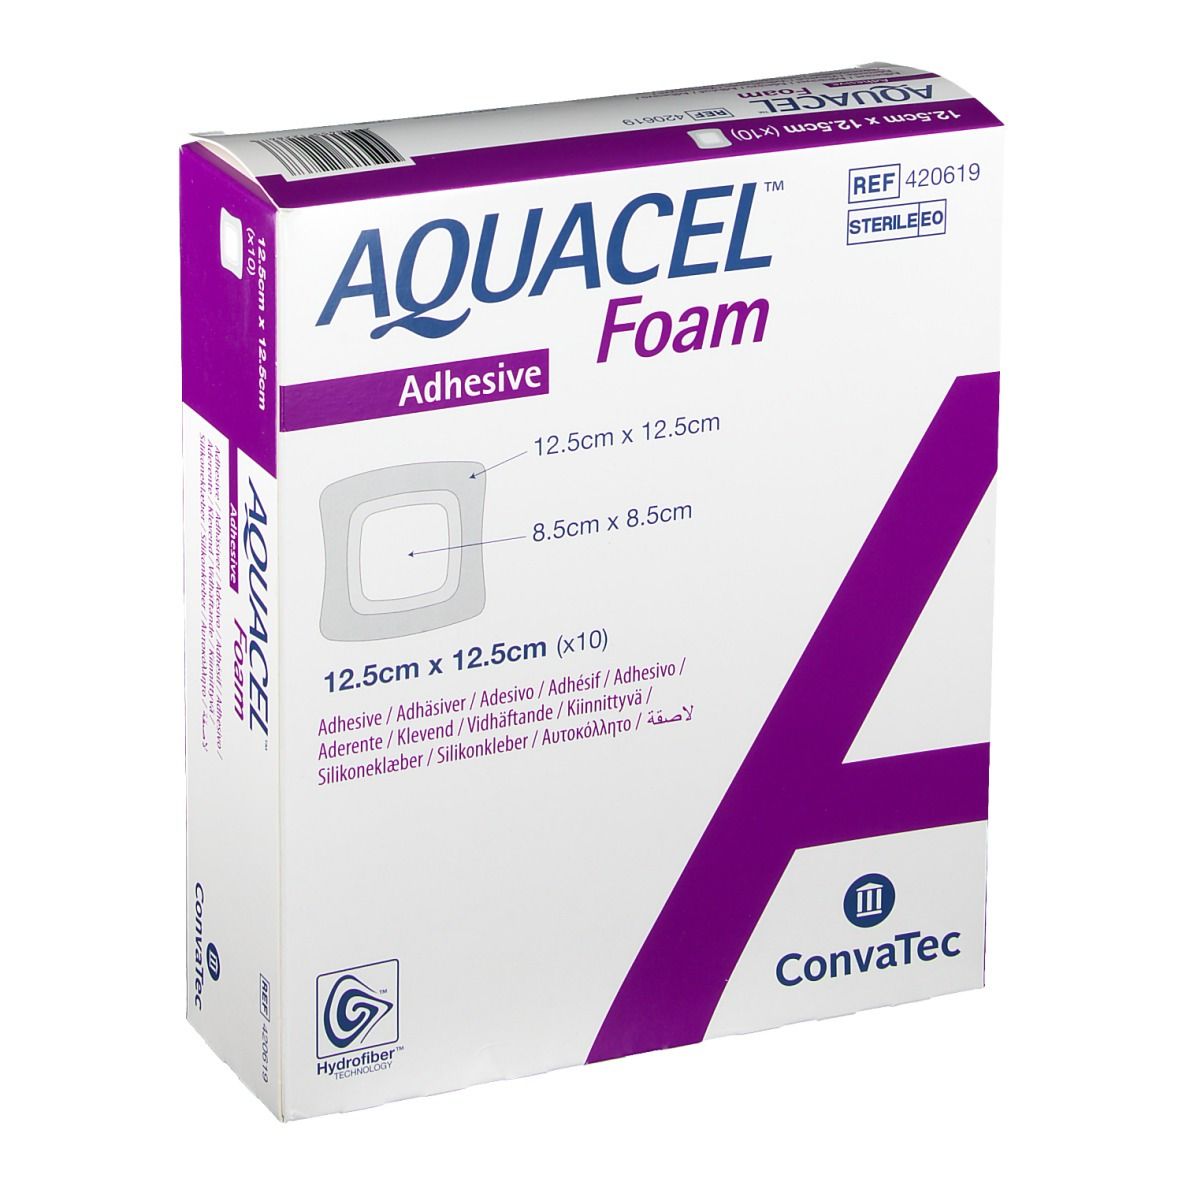 Aquacel Foam adhäsiv 12,5 cm x 12,5 cm Verband